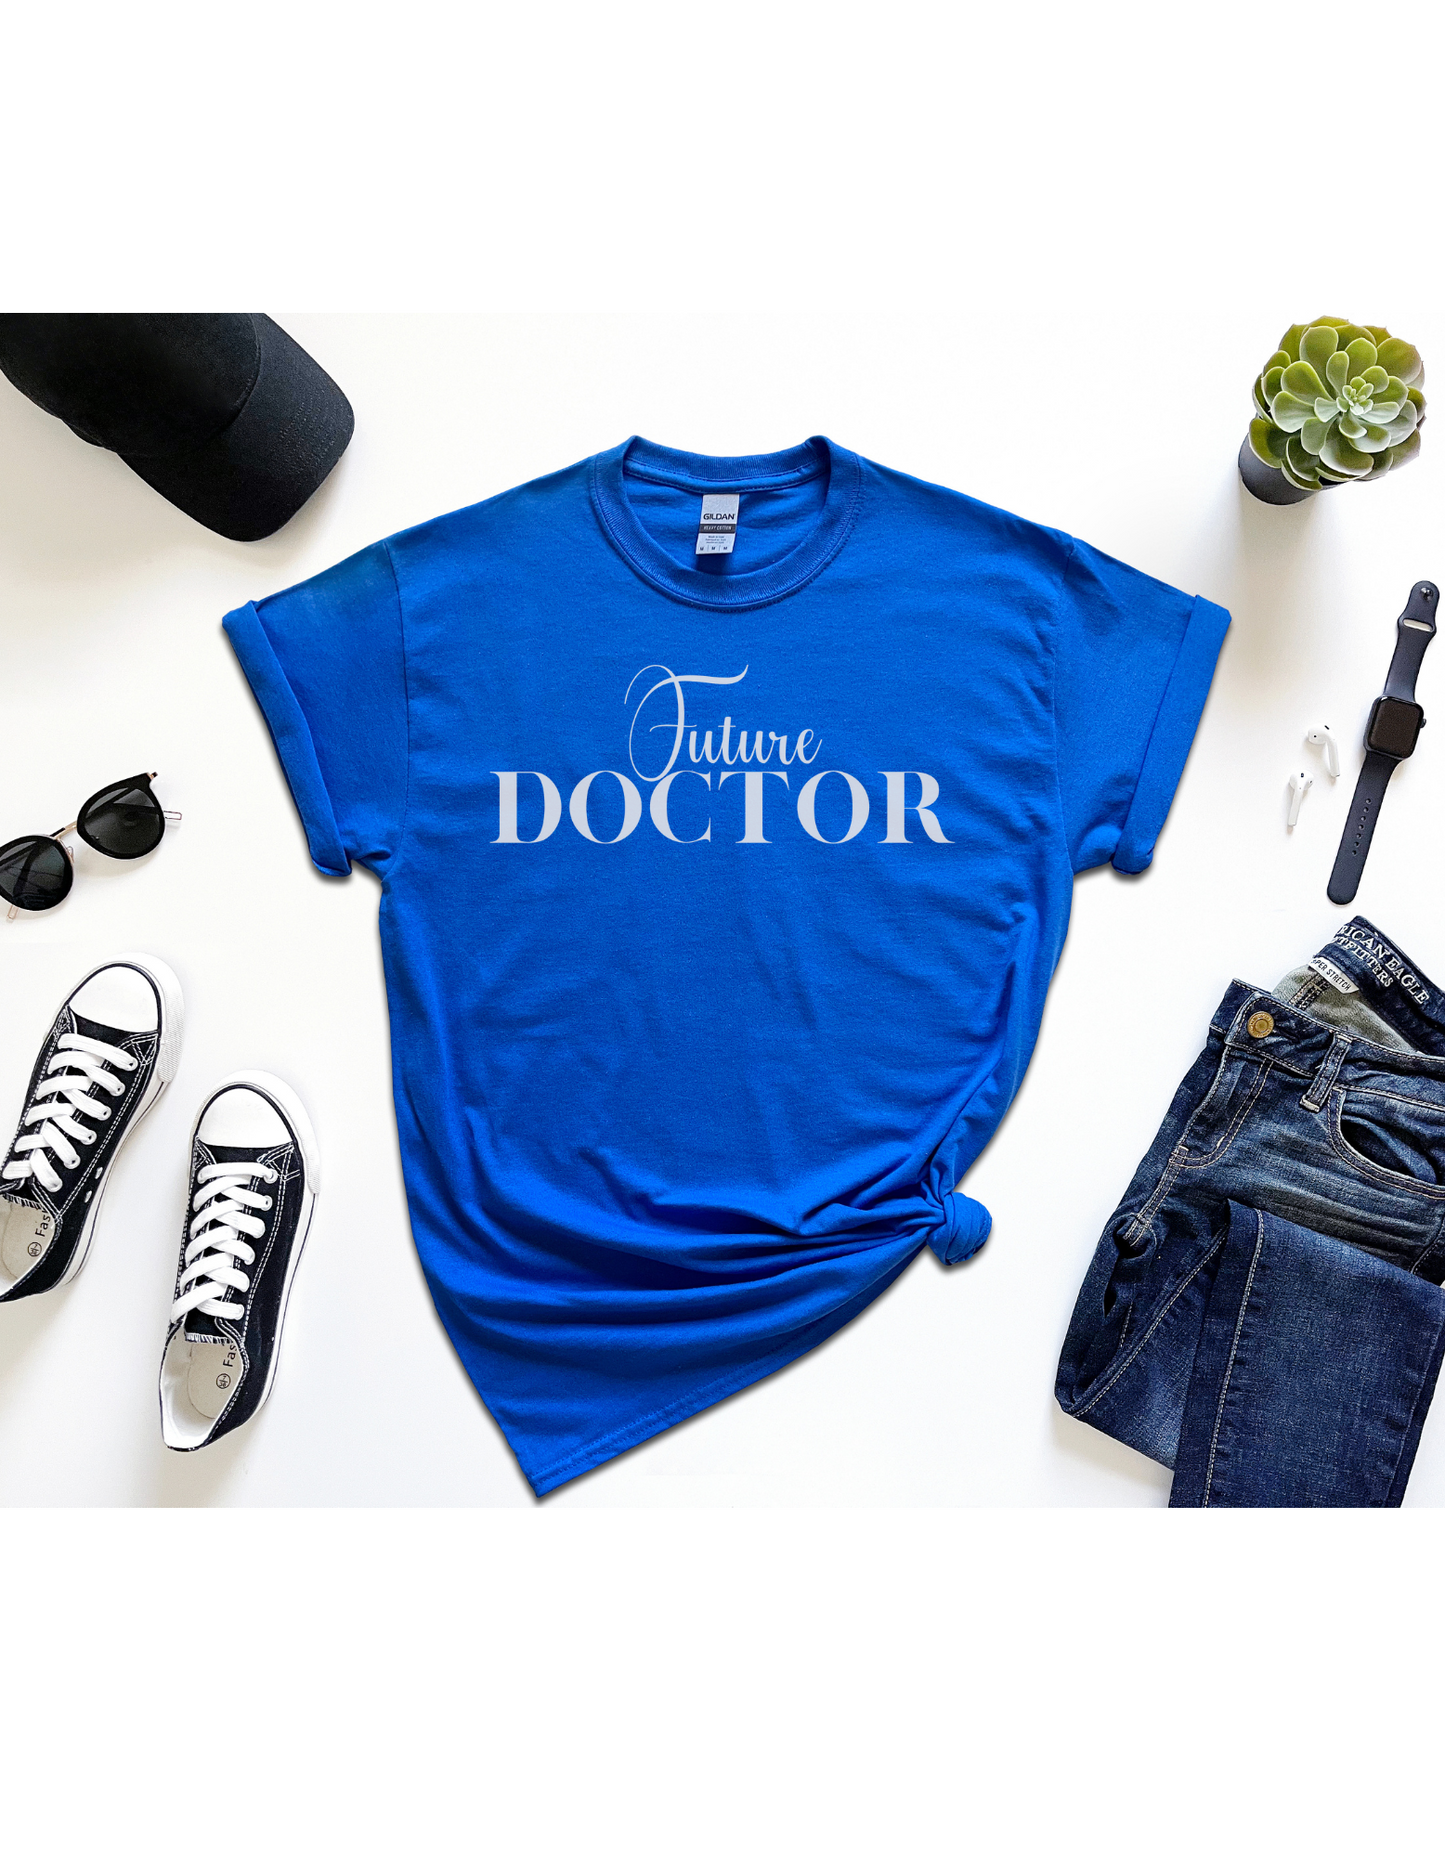 Future Doctor T-Shirt, Medical Student Shirt, Medical School Shirt, Doctor in Progress, Future Doctor Gift,